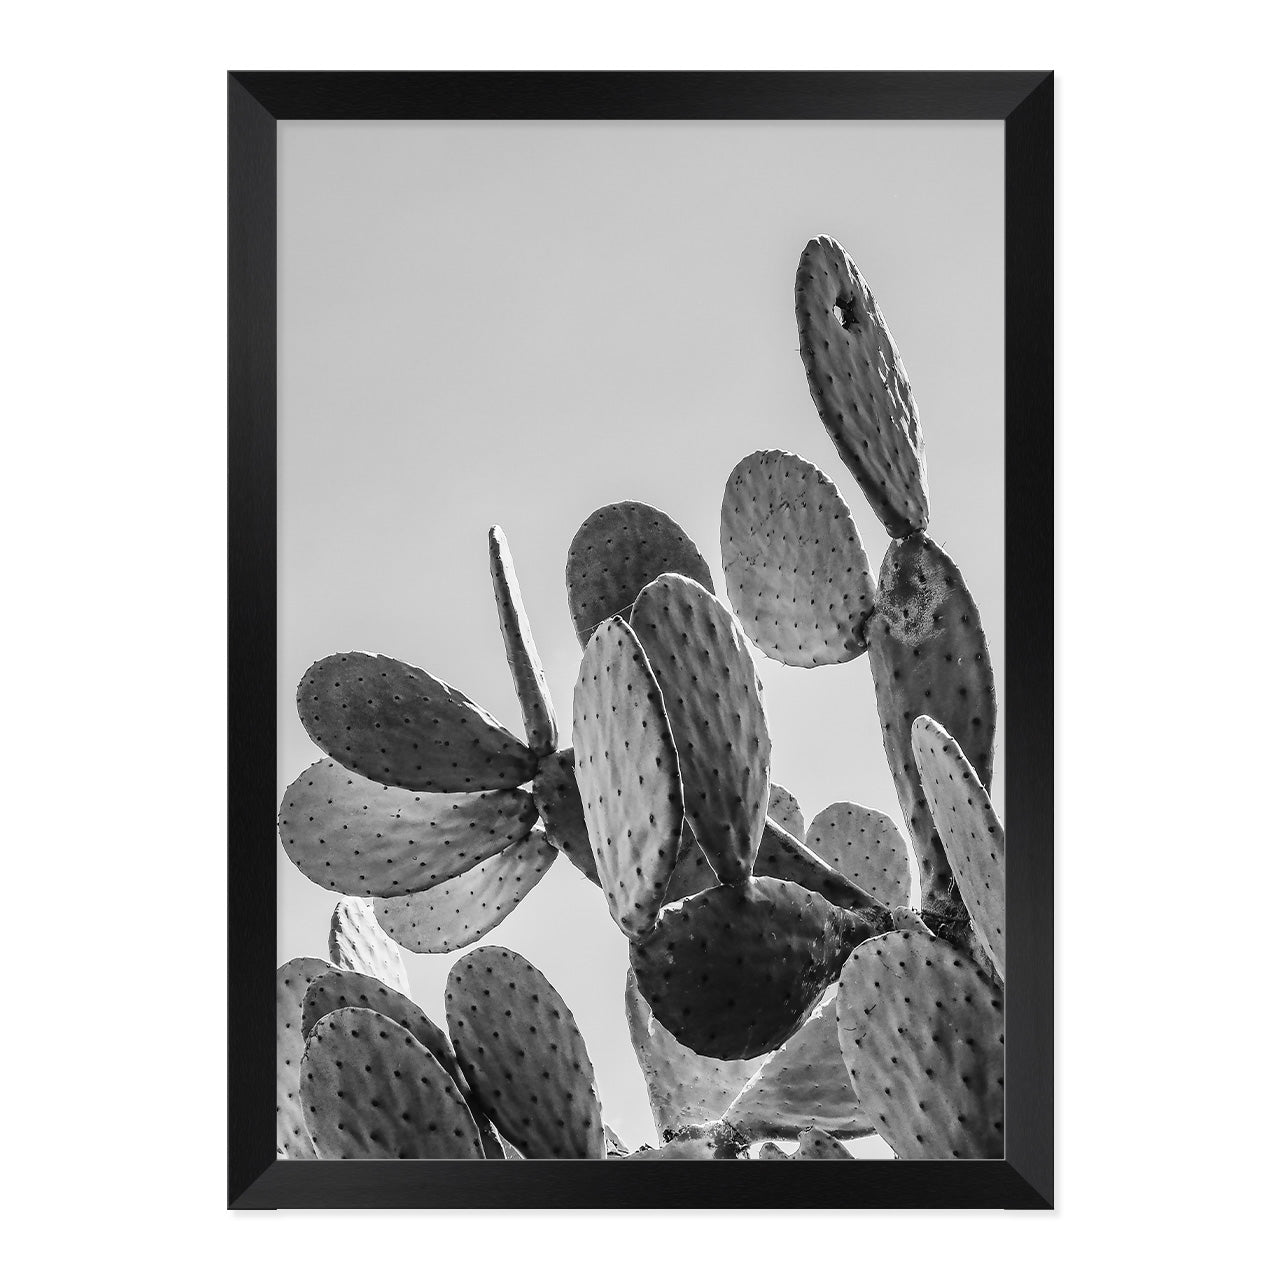 Black & White Cactus Photo Print A3 Black Frame